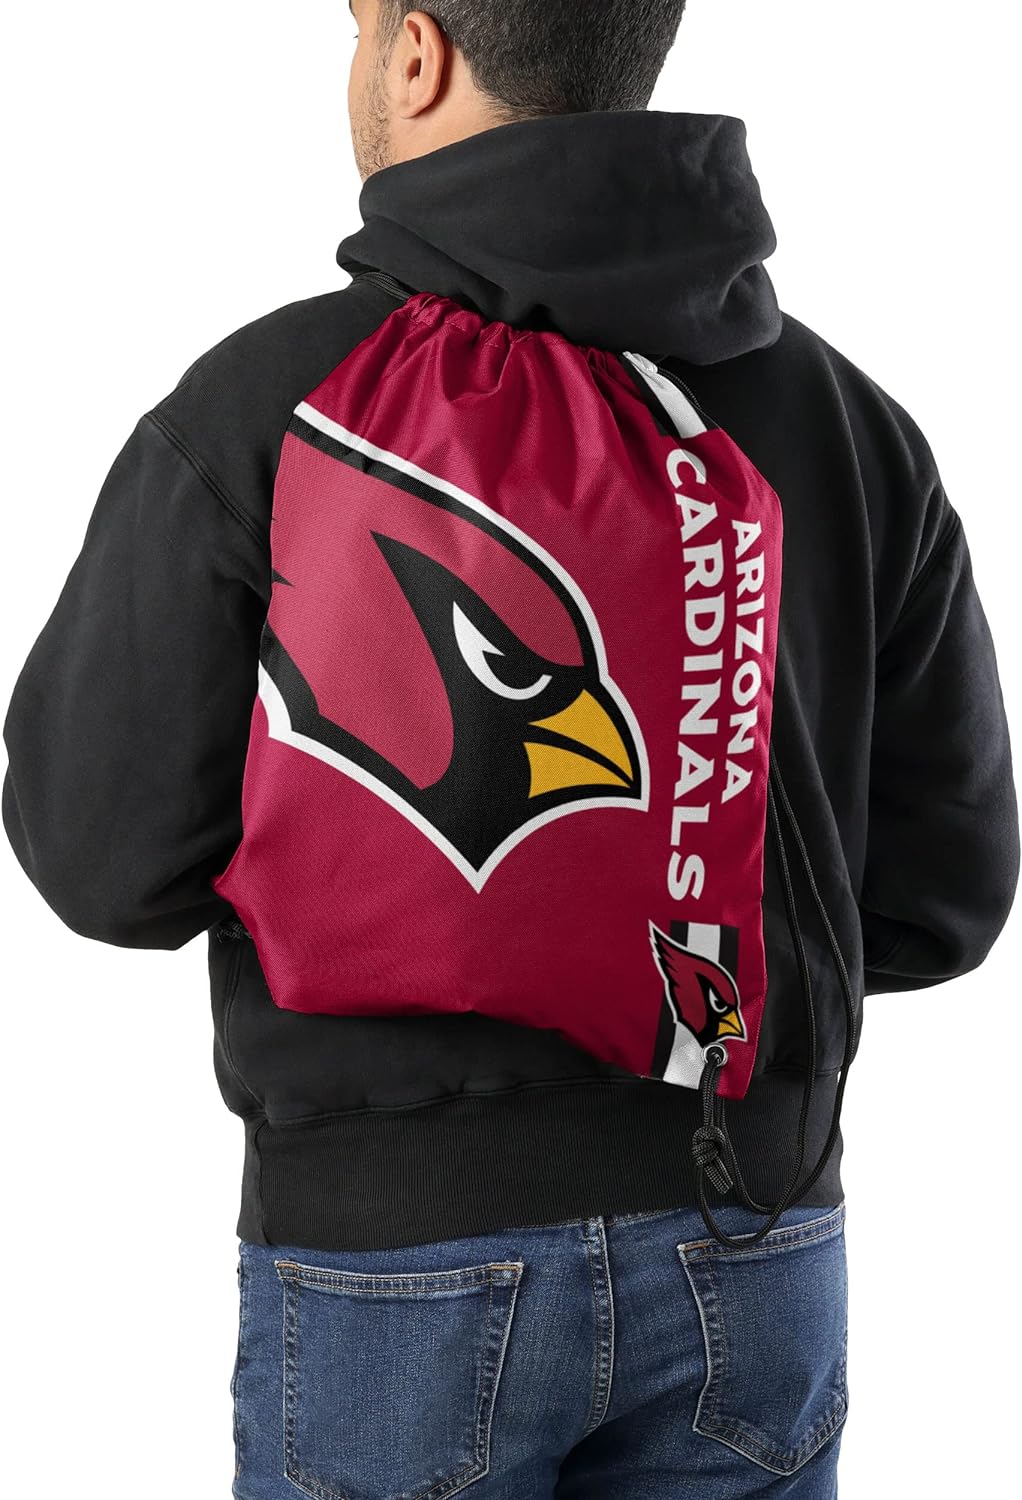 FOCO Arizona Cardinals NFL Big Logo Drawstring Backpack - image 2 of 2